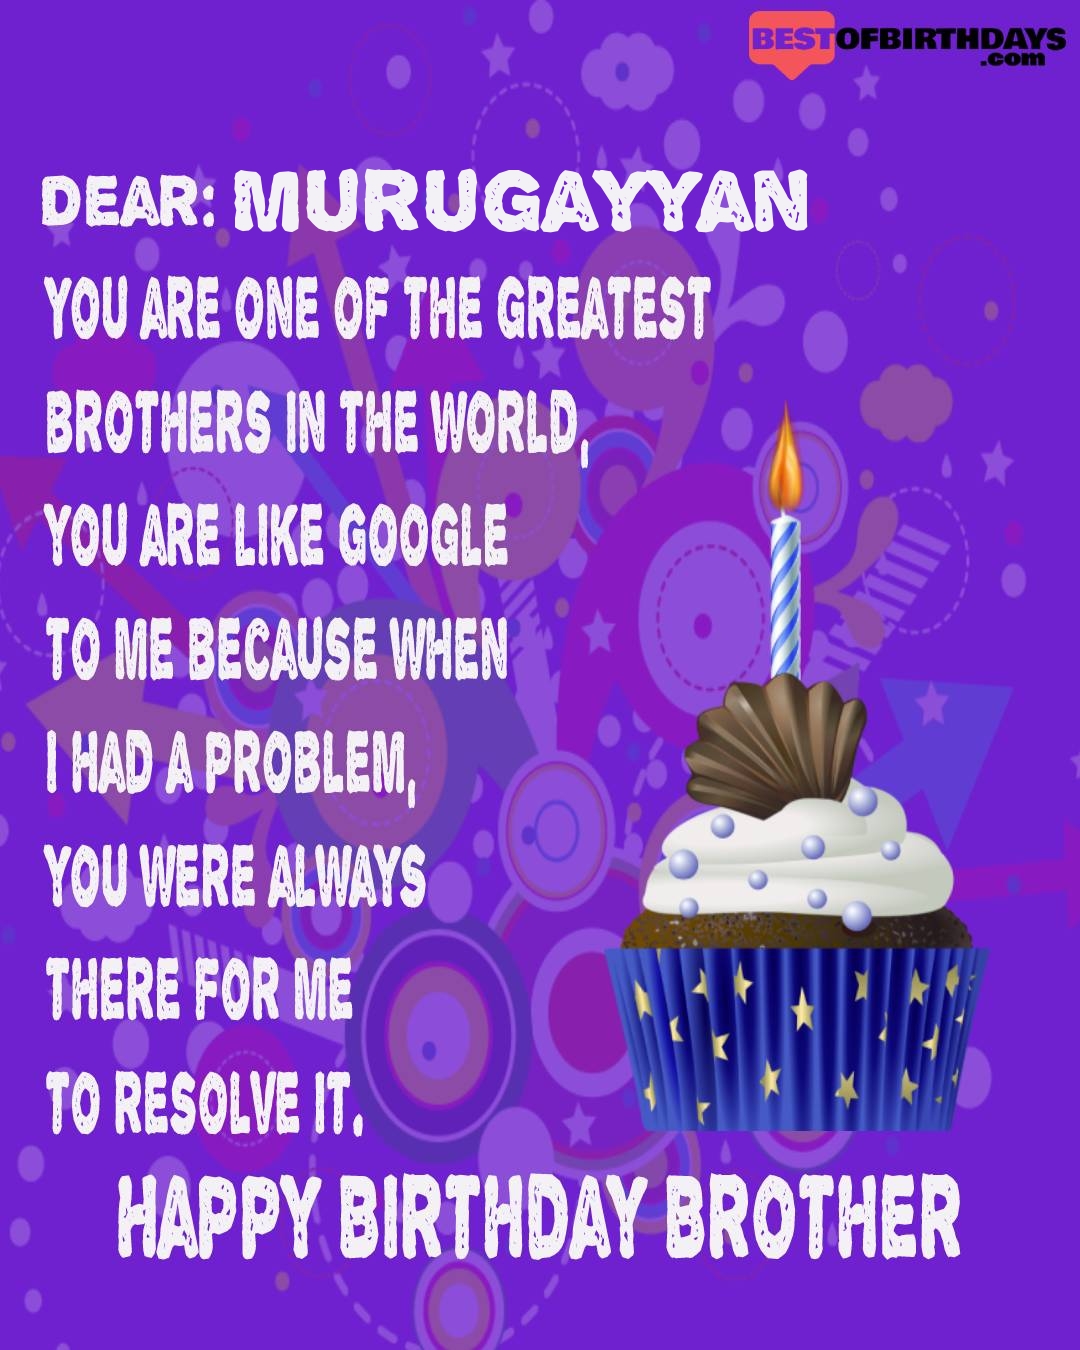 Happy birthday murugayyan bhai brother bro